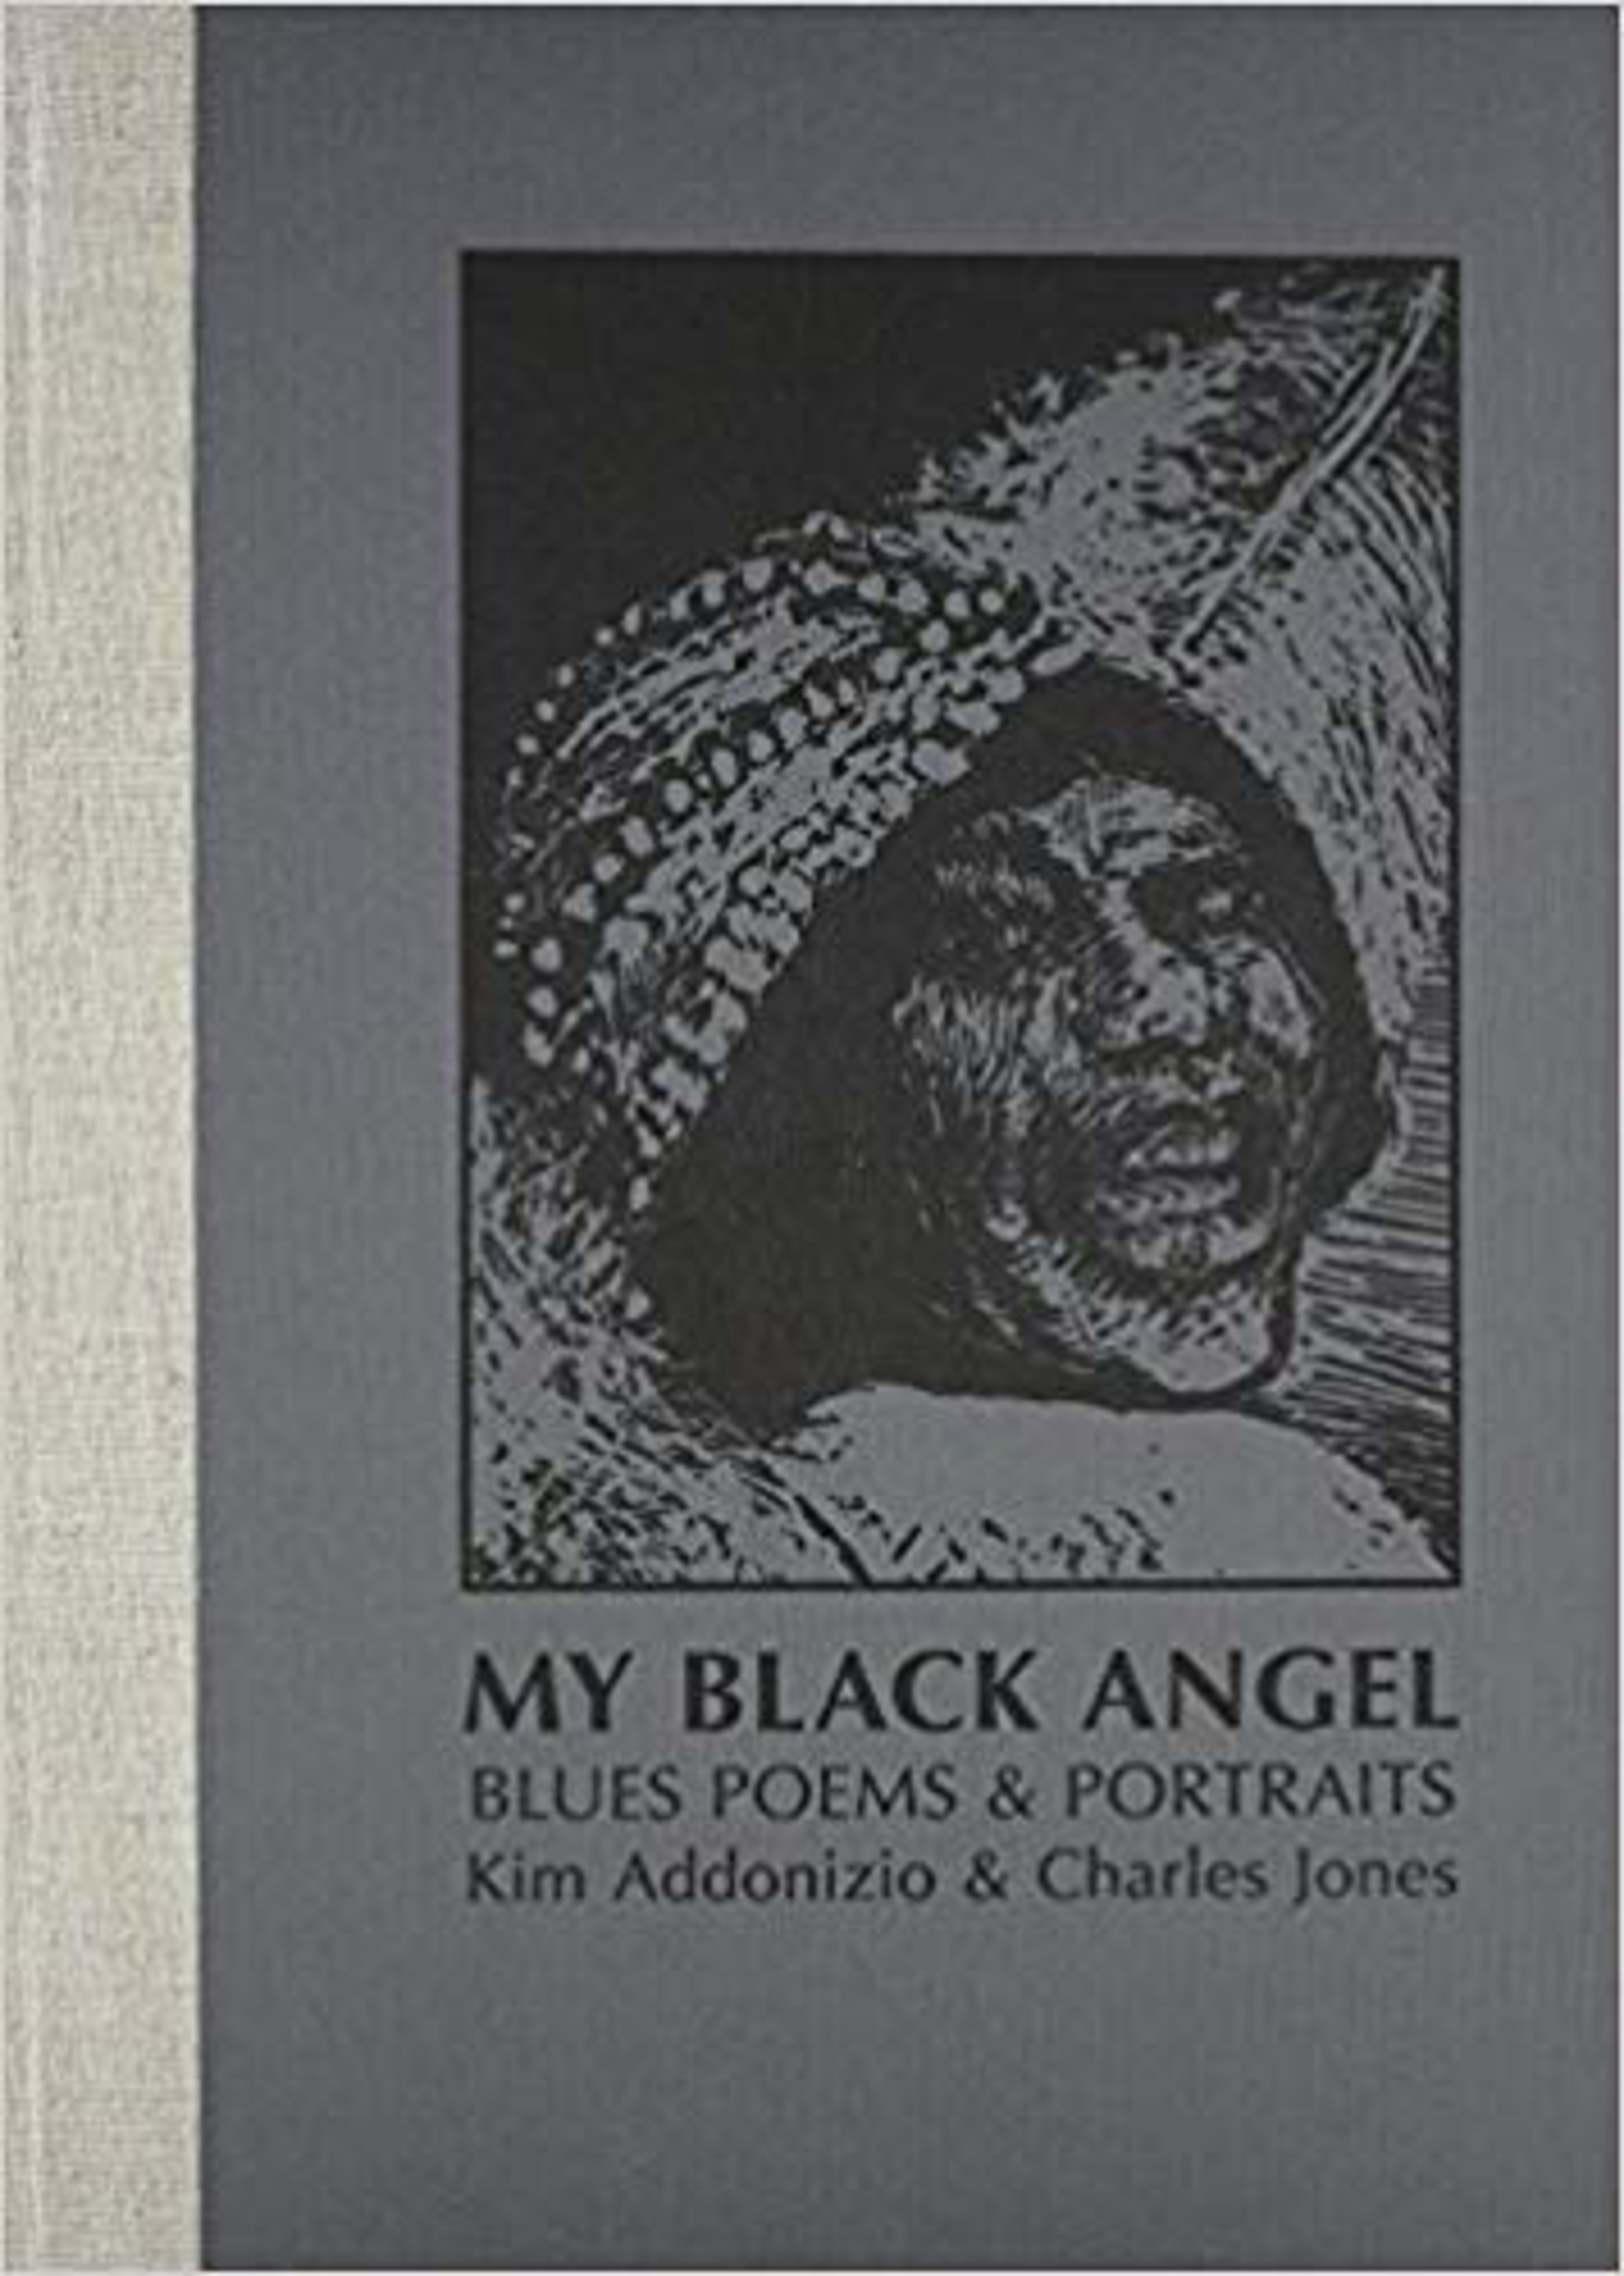 My Black Angel: Blues Poems & Portraits by Kim Addonizio & Charles Jones by Publications